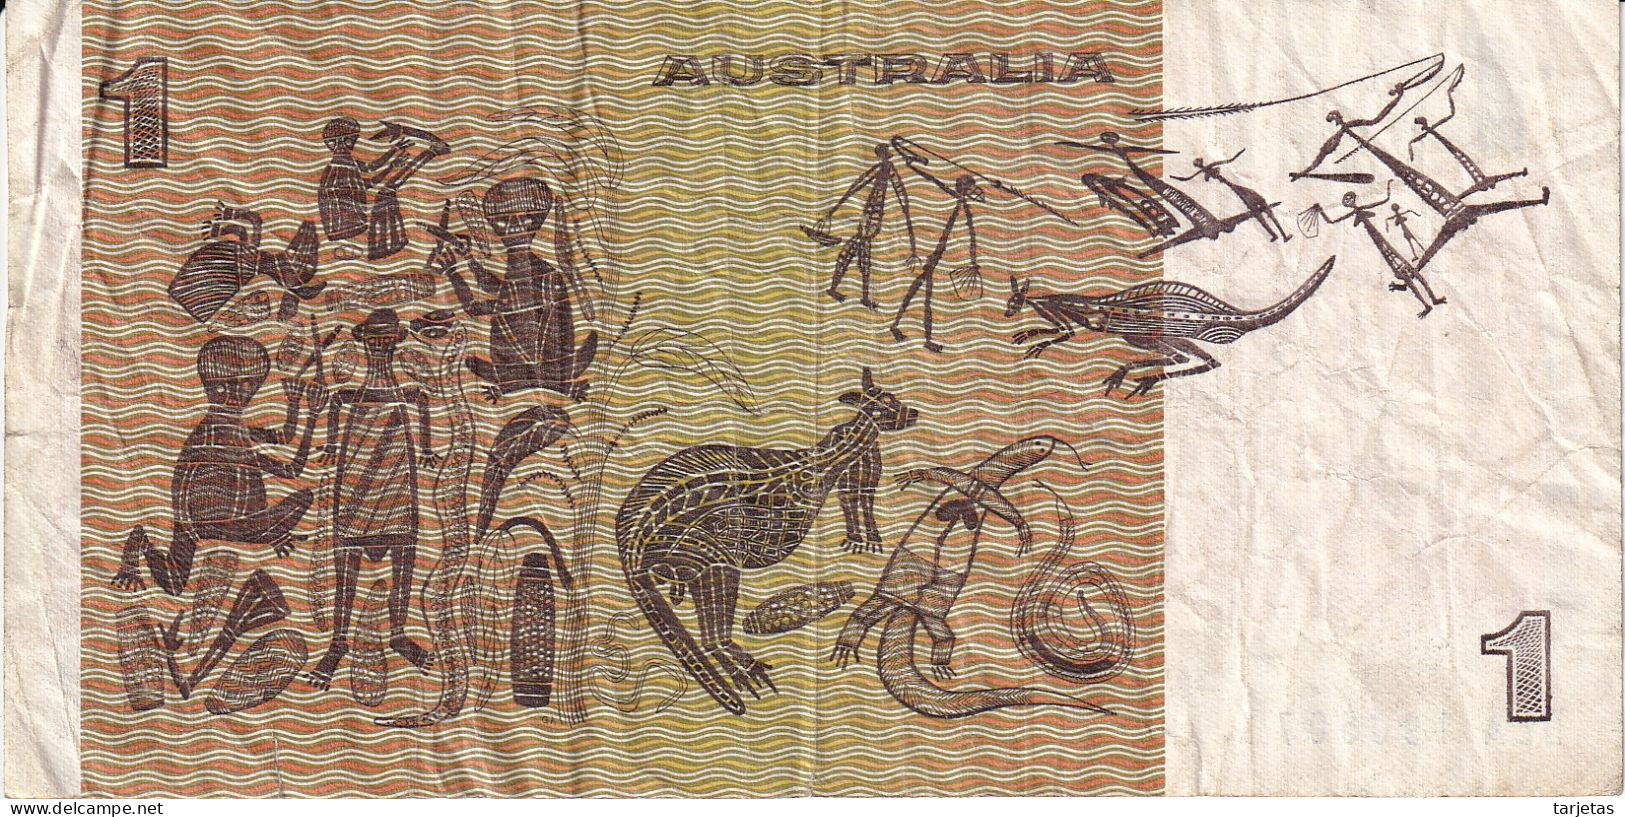 BILLETE DE AUSTRALIA DE 1 DOLLAR AÑOS 1974-83 SERIE DEA  (BANKNOTE) - 1974-94 Australia Reserve Bank (paper Notes)